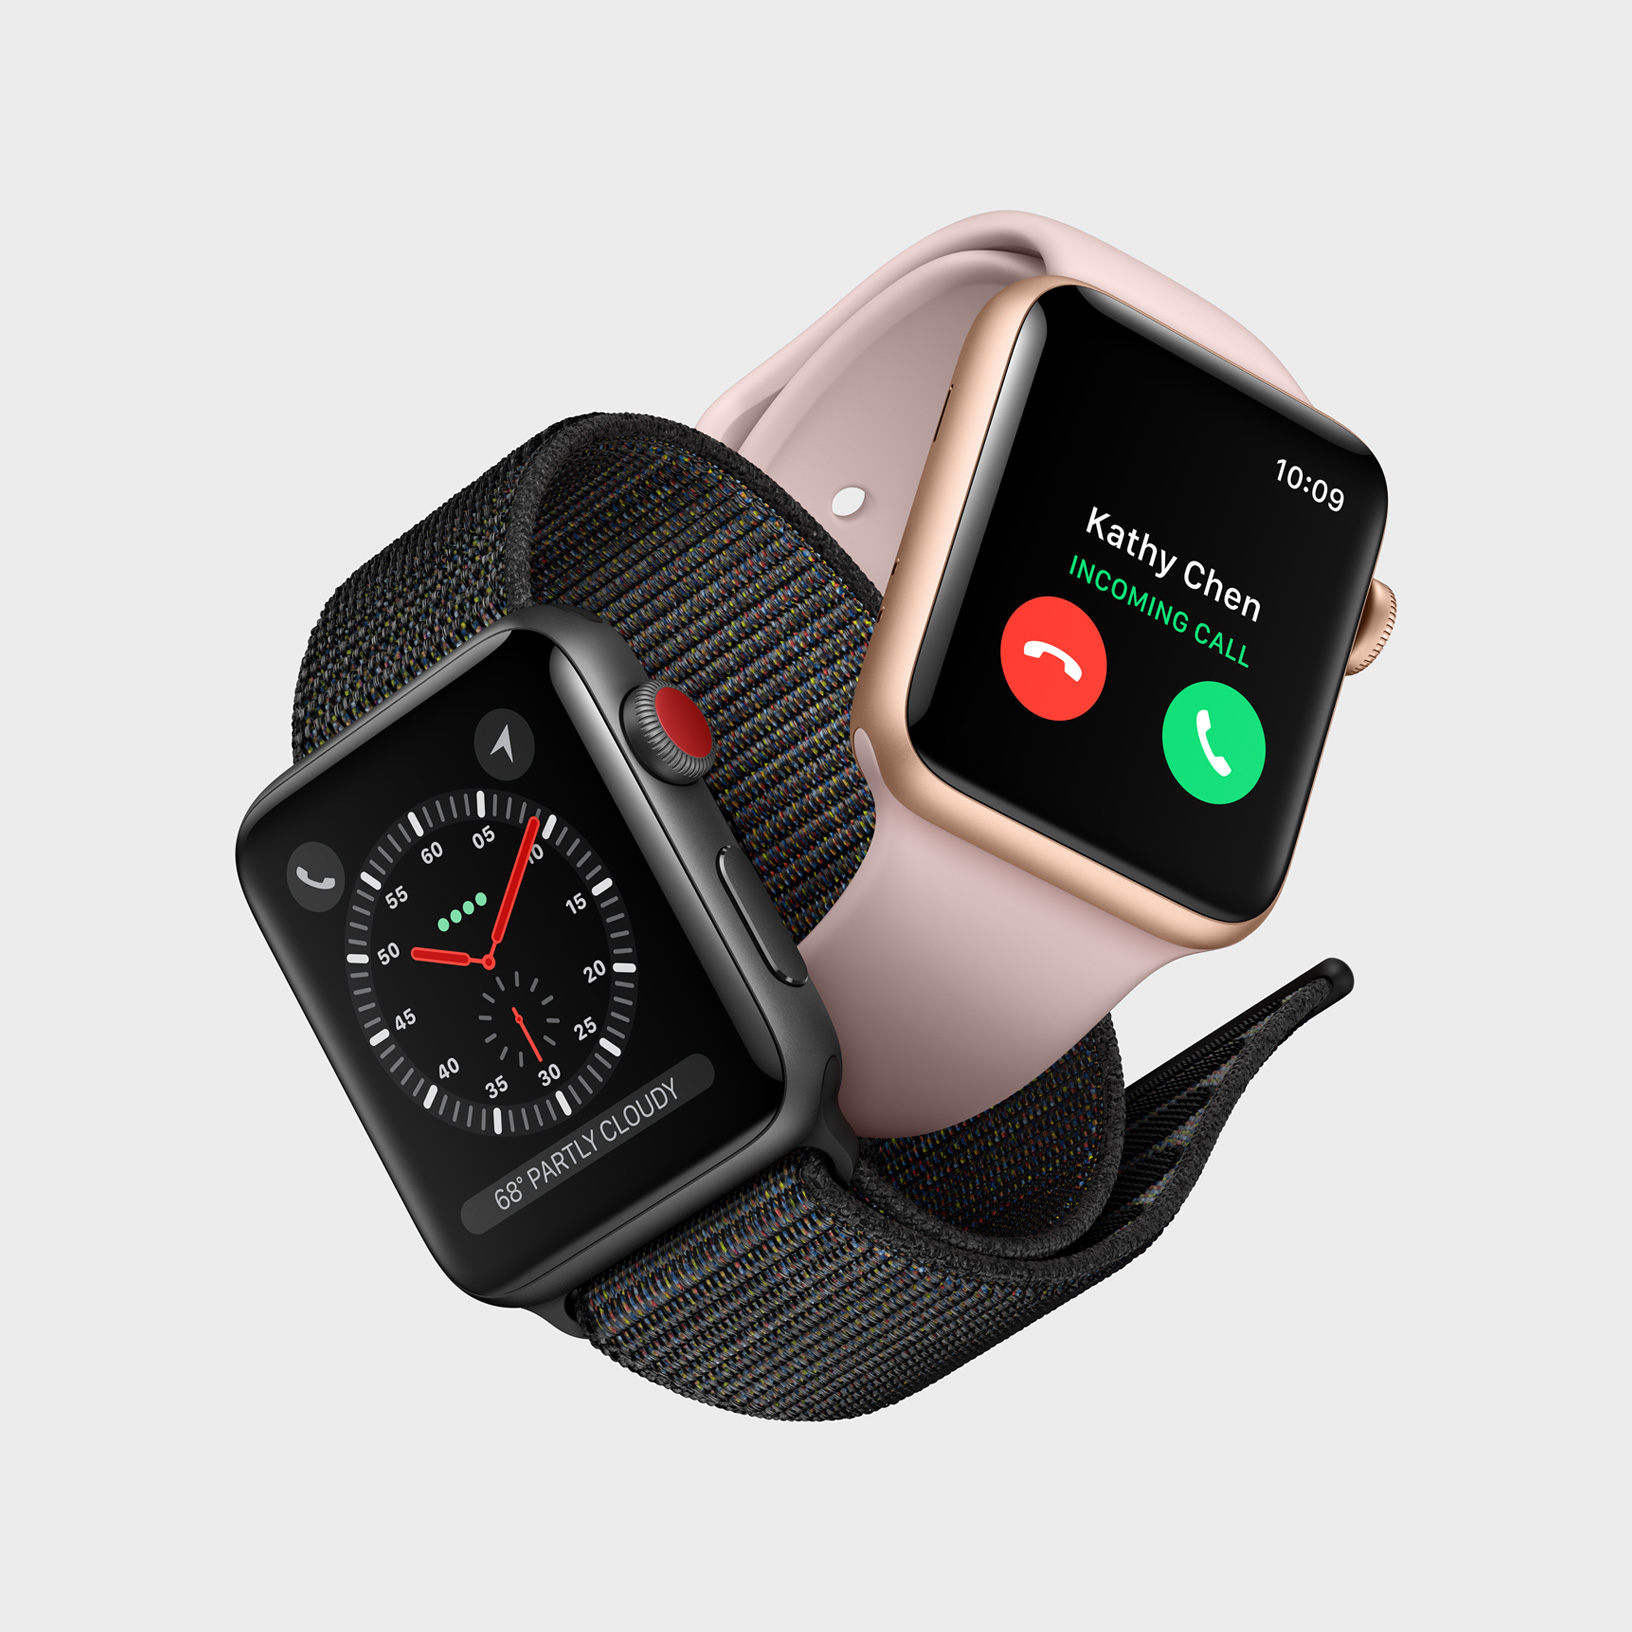 Apple Watch Series 3 | Keynote d'Apple du 12 septembre 2017